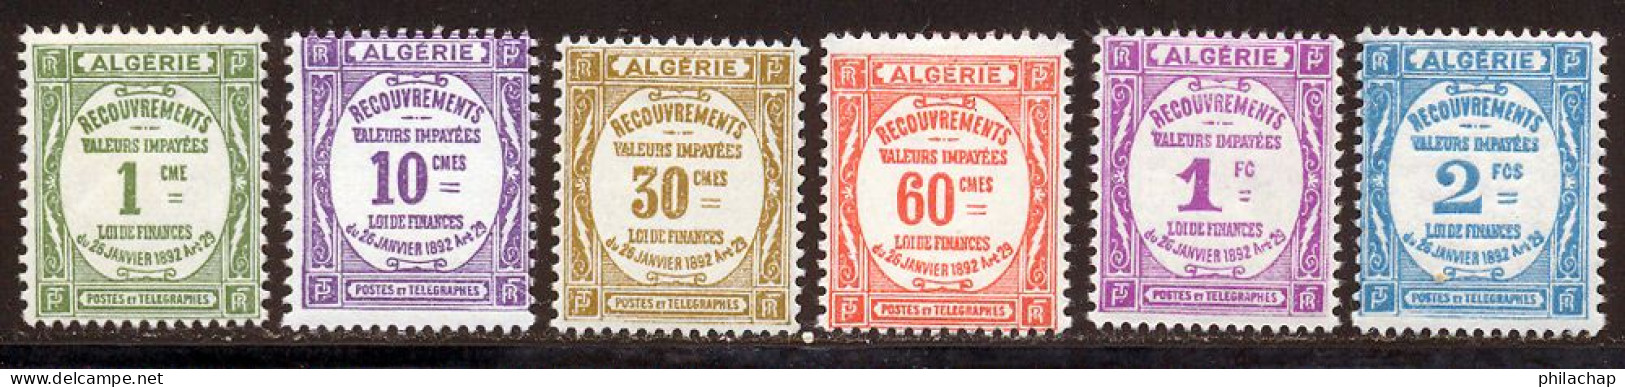 Algerie Taxe 1926 Yvert 15 / 20 * TB Charniere(s) - Timbres-taxe